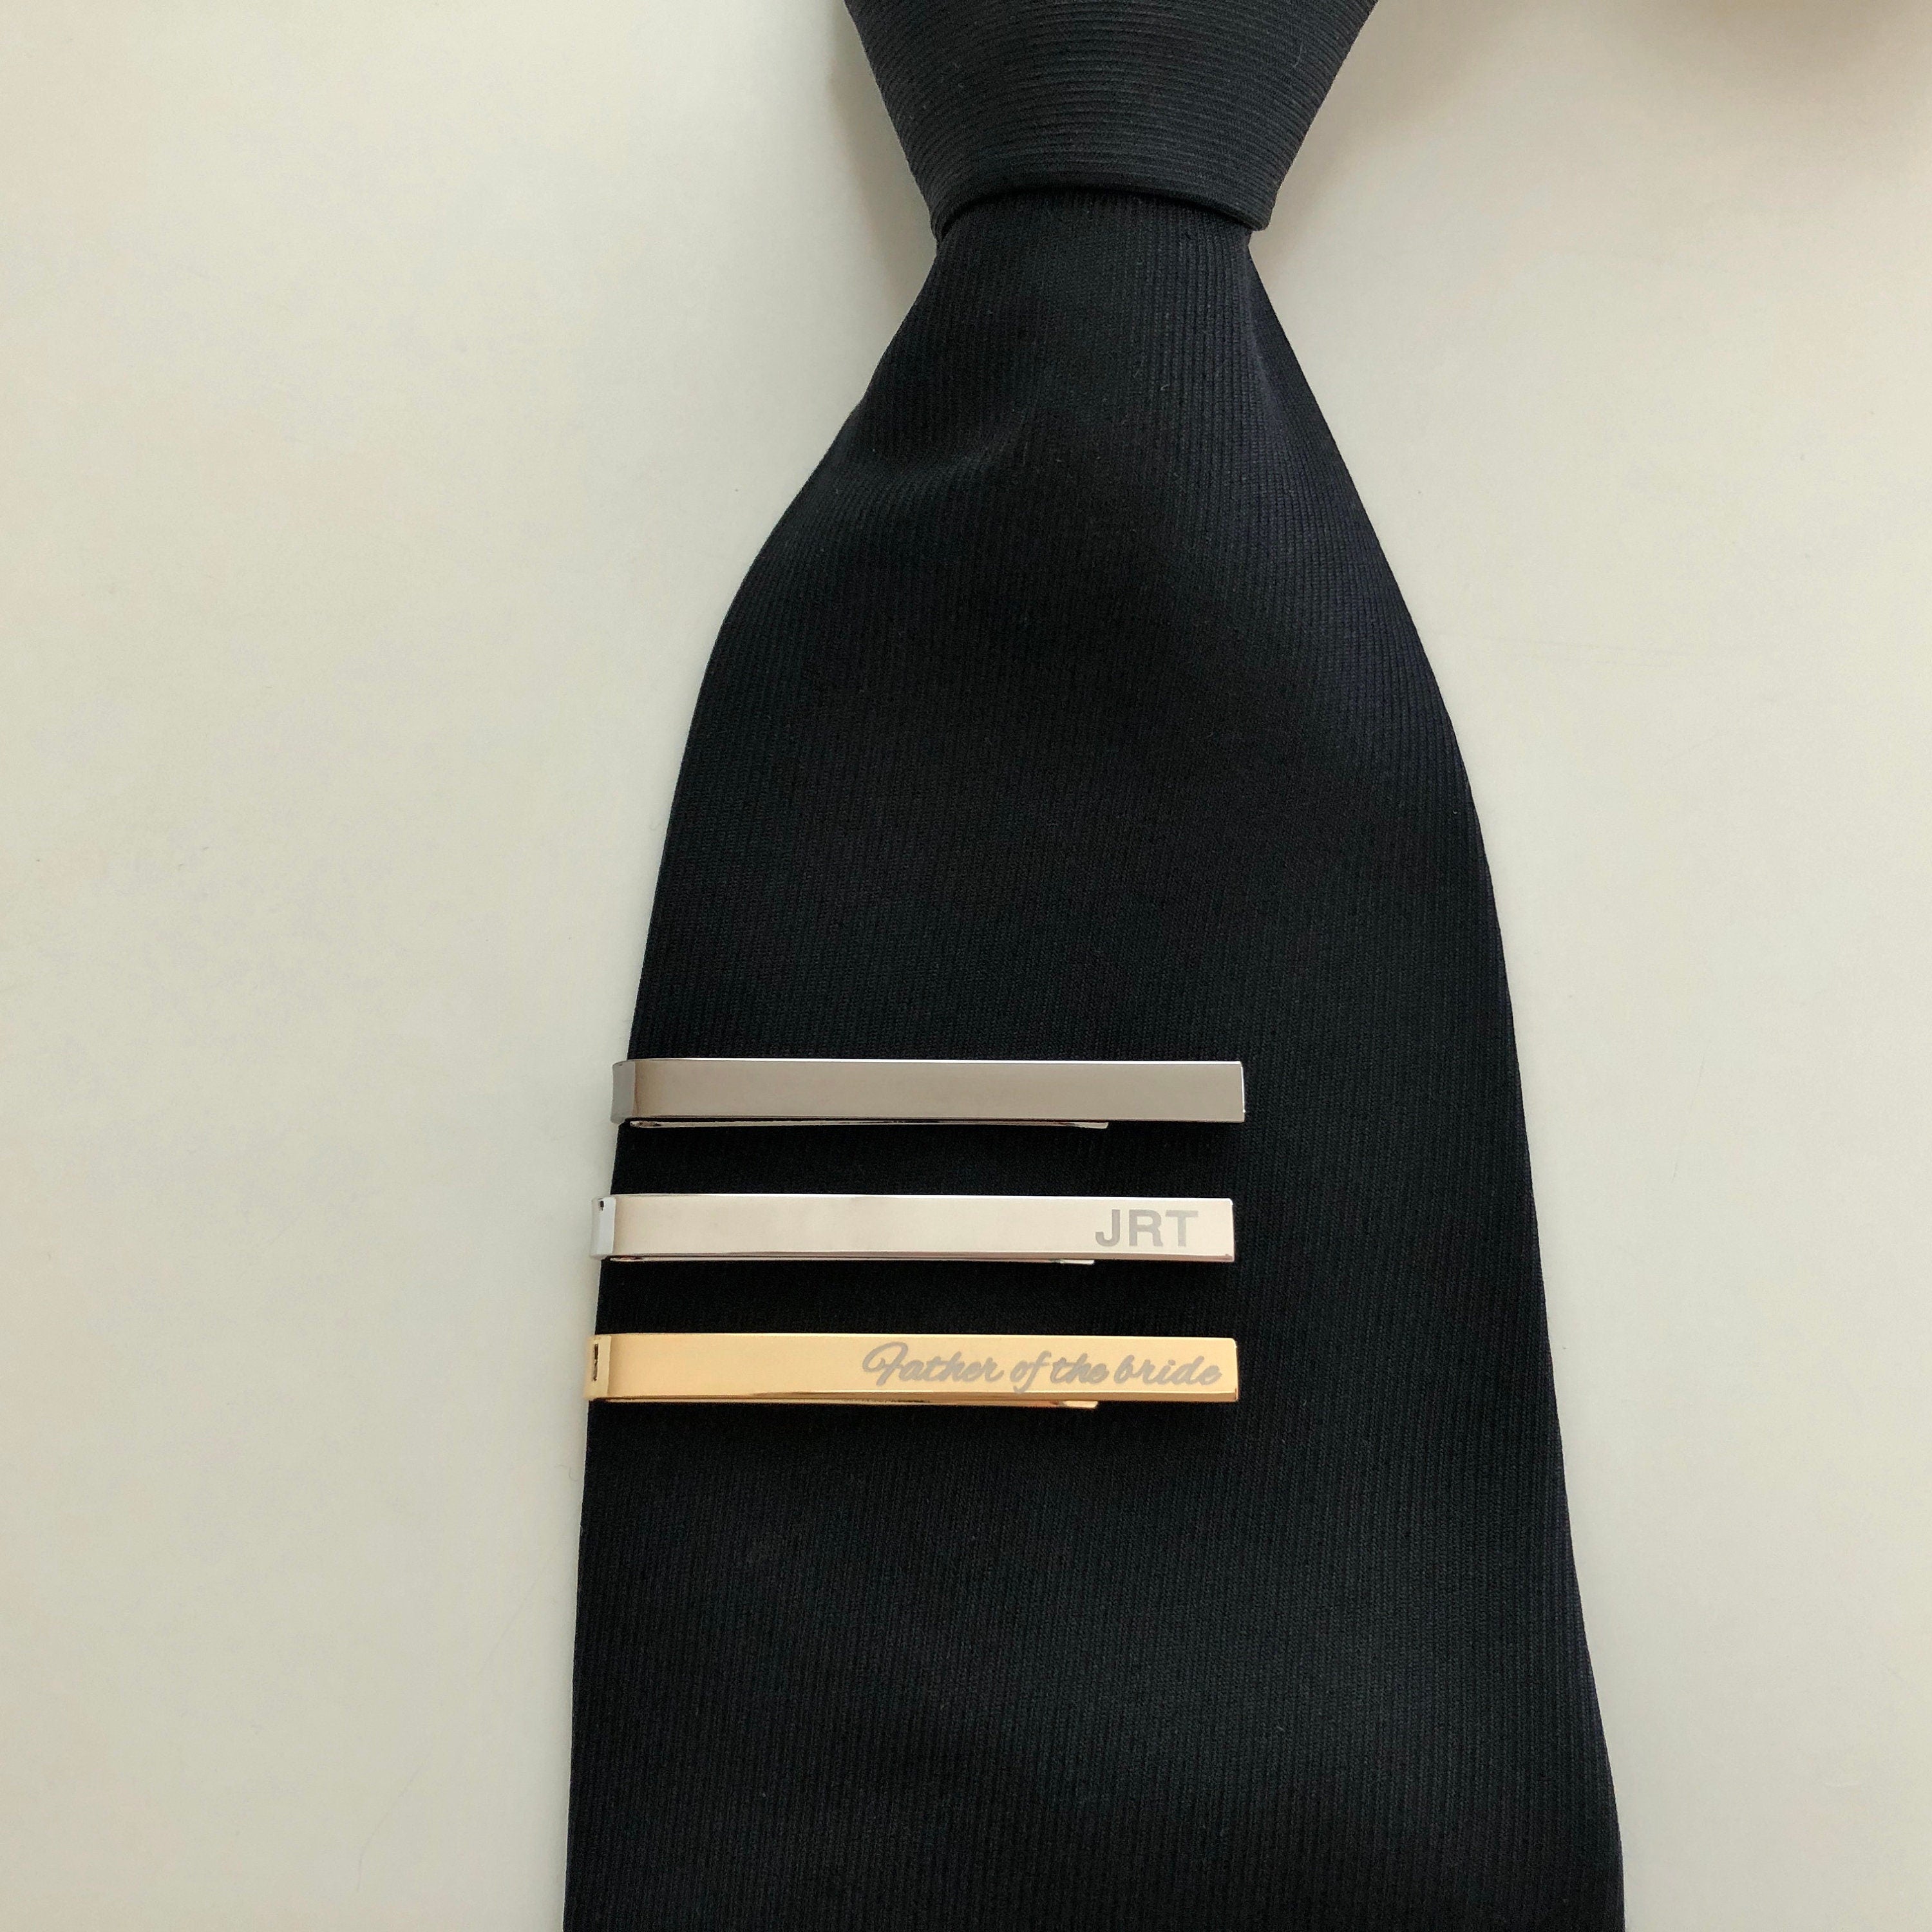 Men's Personalized Tie Bar - 7th Anniversary Gift - Copper Tie Clip - Gift  for Him - Monogram - Groomsmen Gift